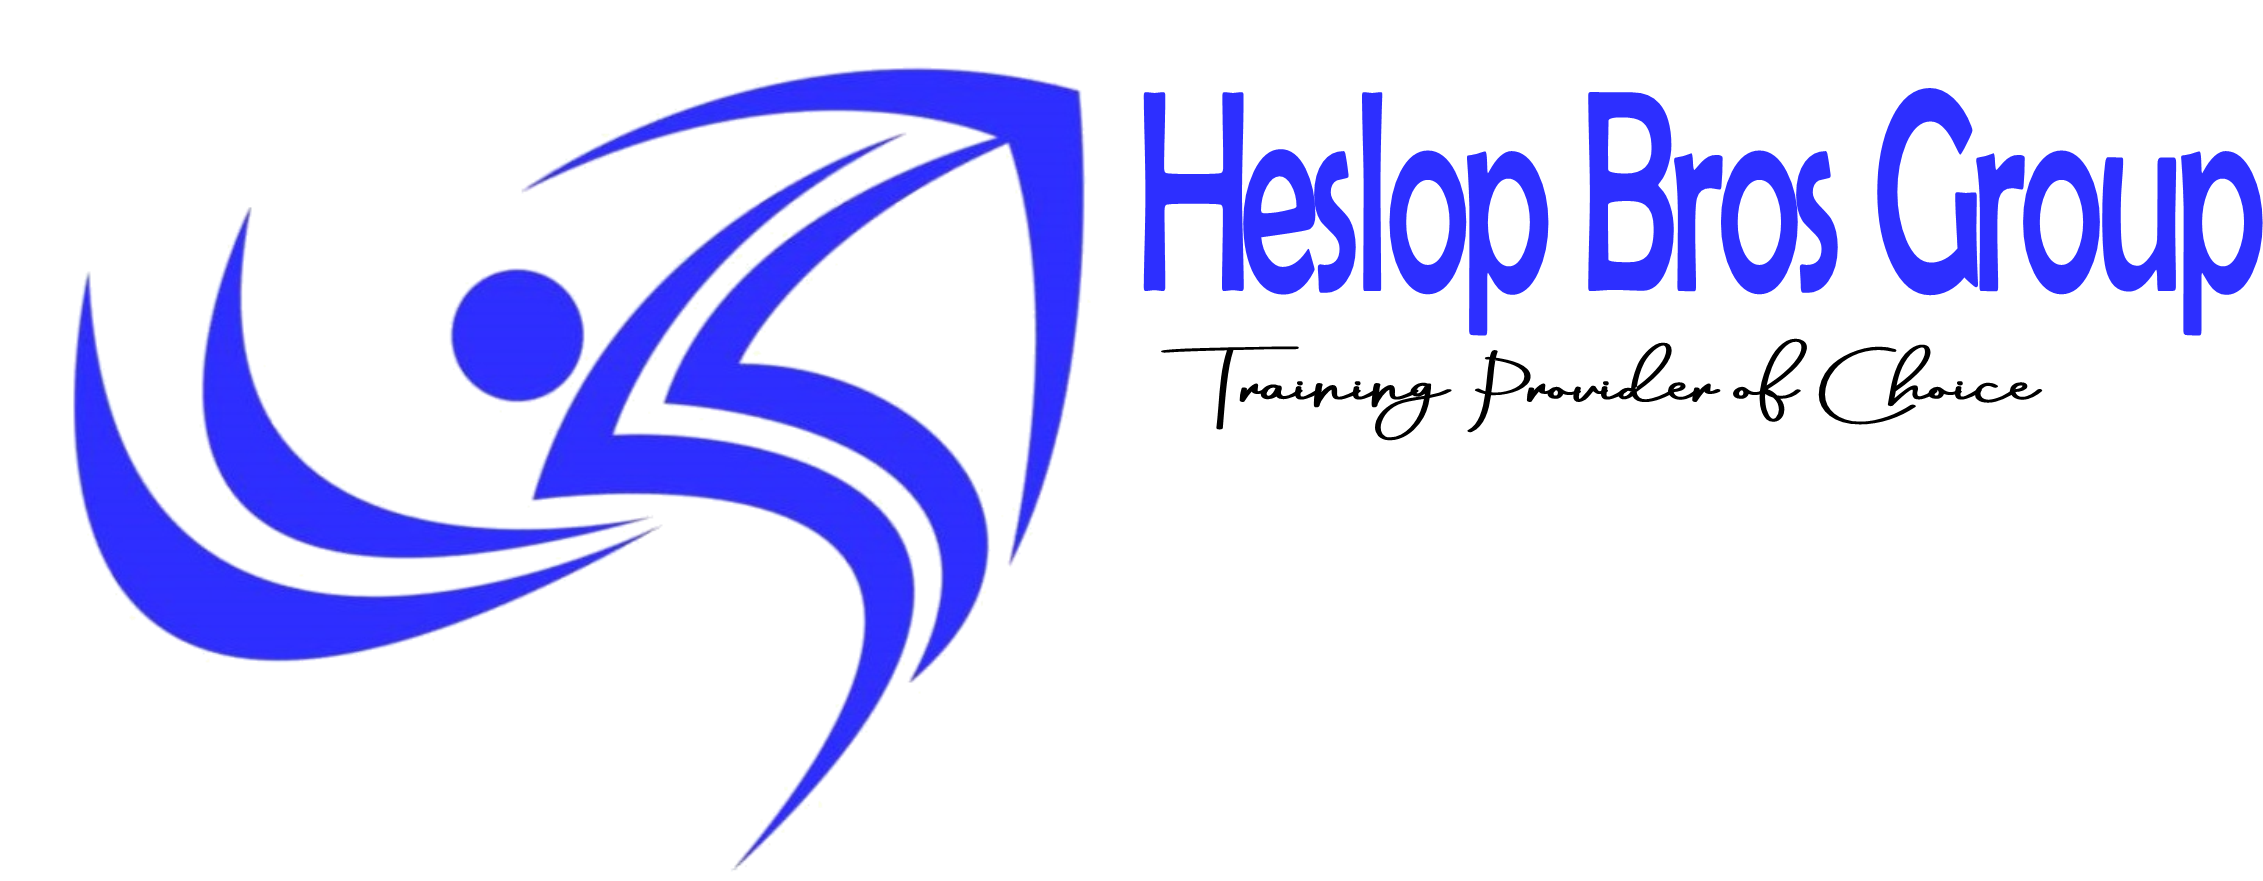 Heslop Bros Group Logo